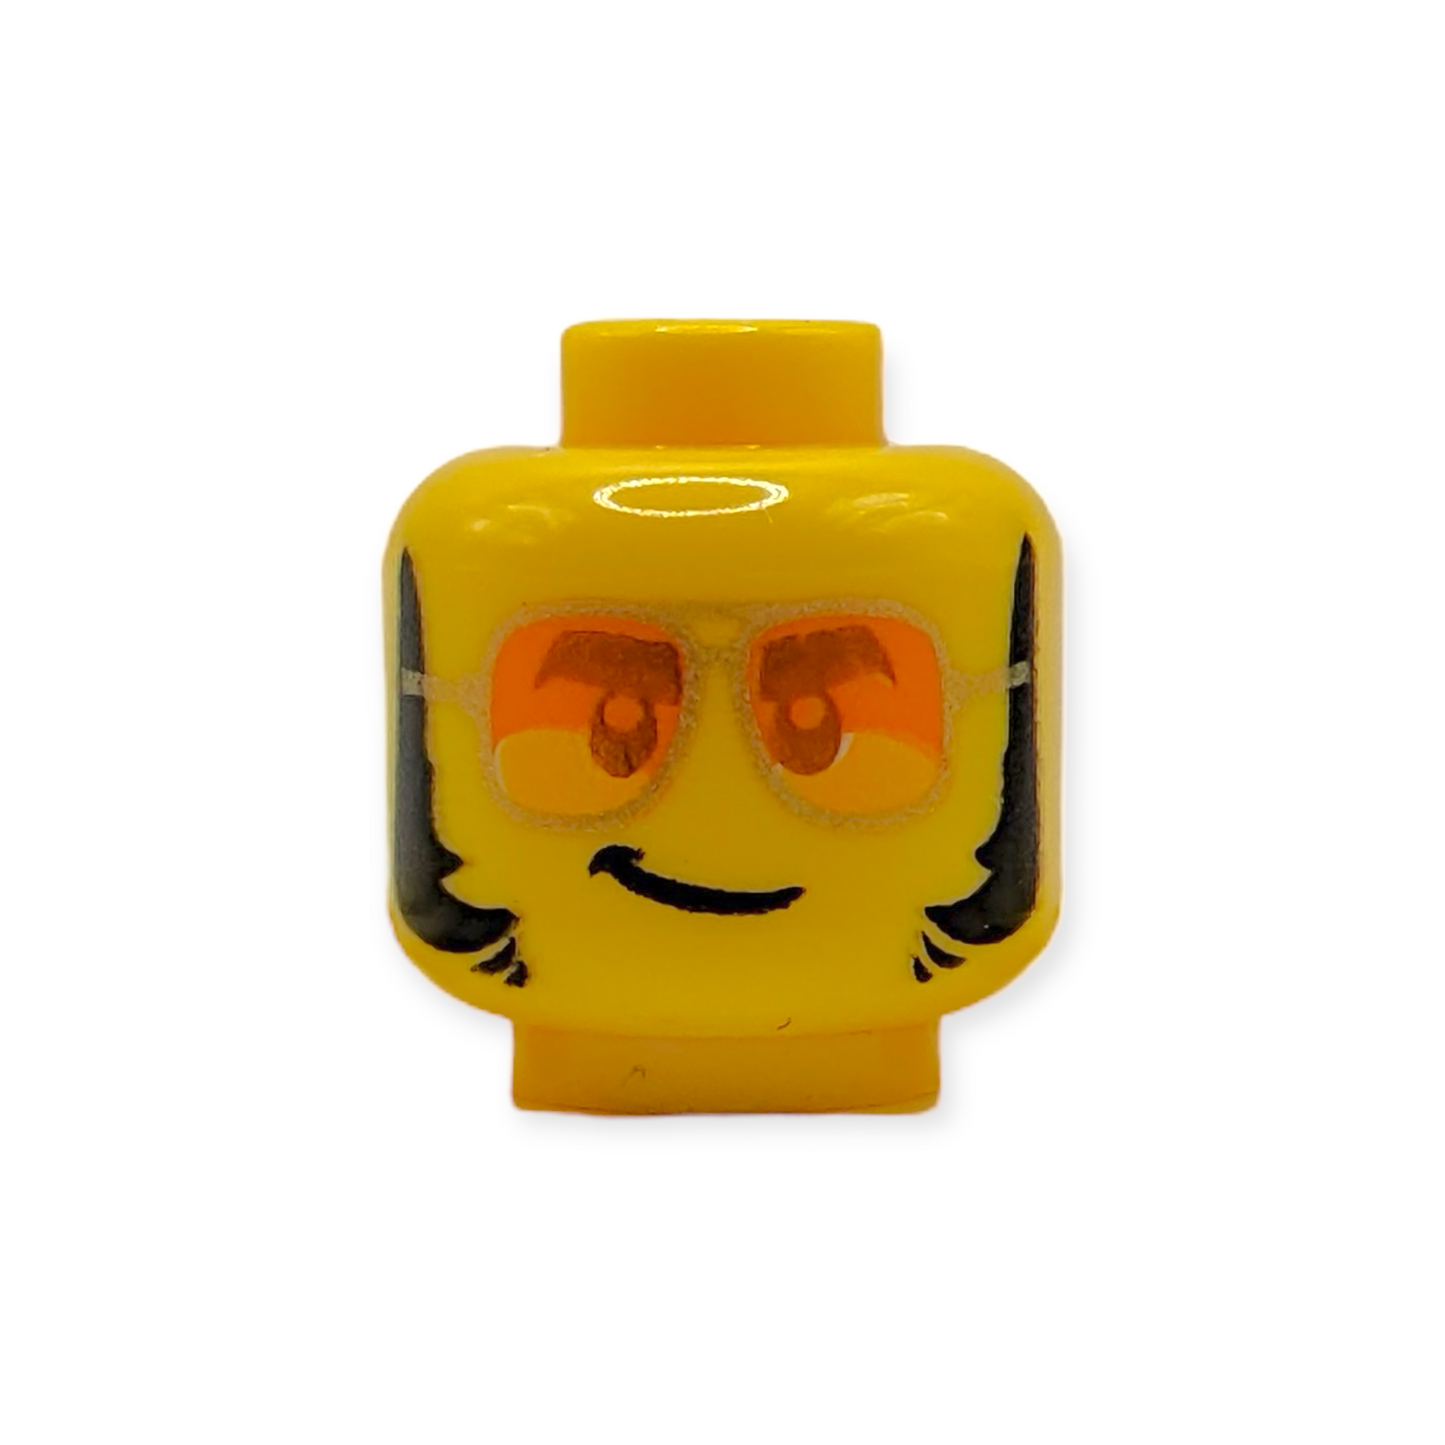 LEGO Head - 3071 Glasses, Orange Sunglasses with Silver Frames